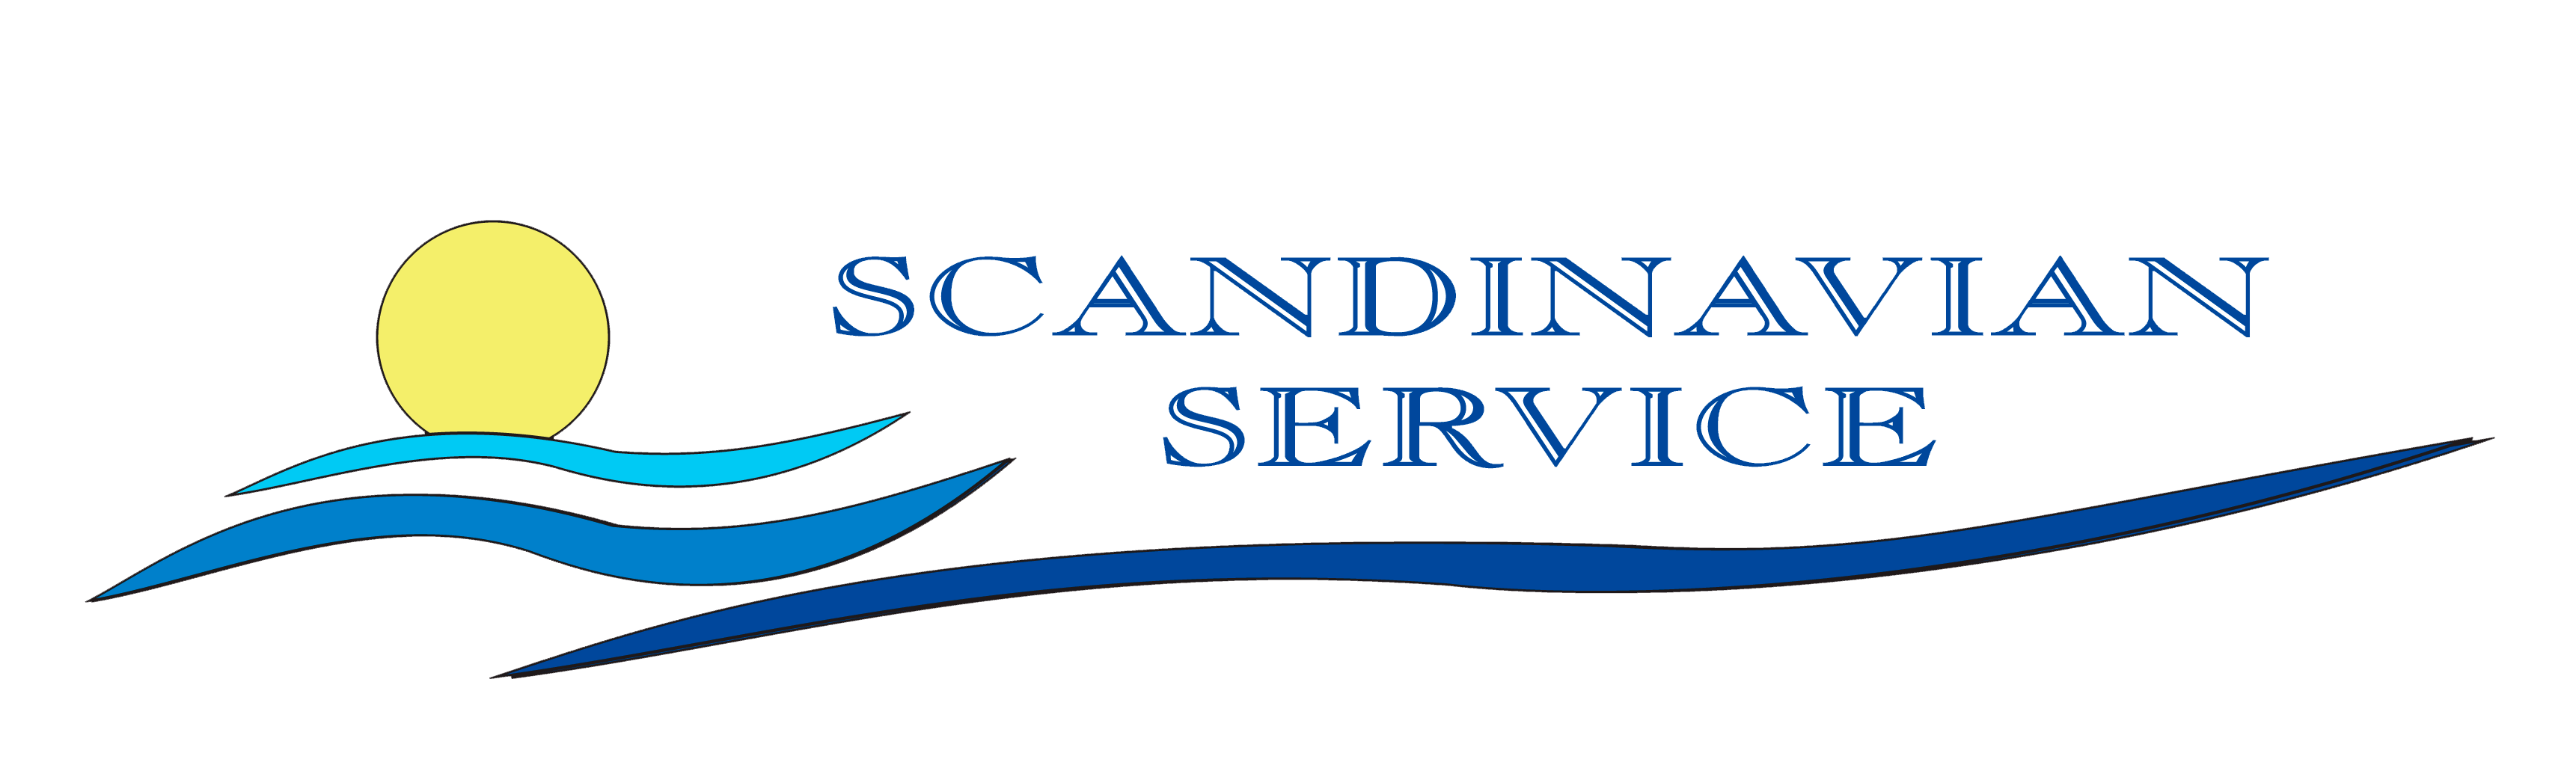 scandinavian-service-logo